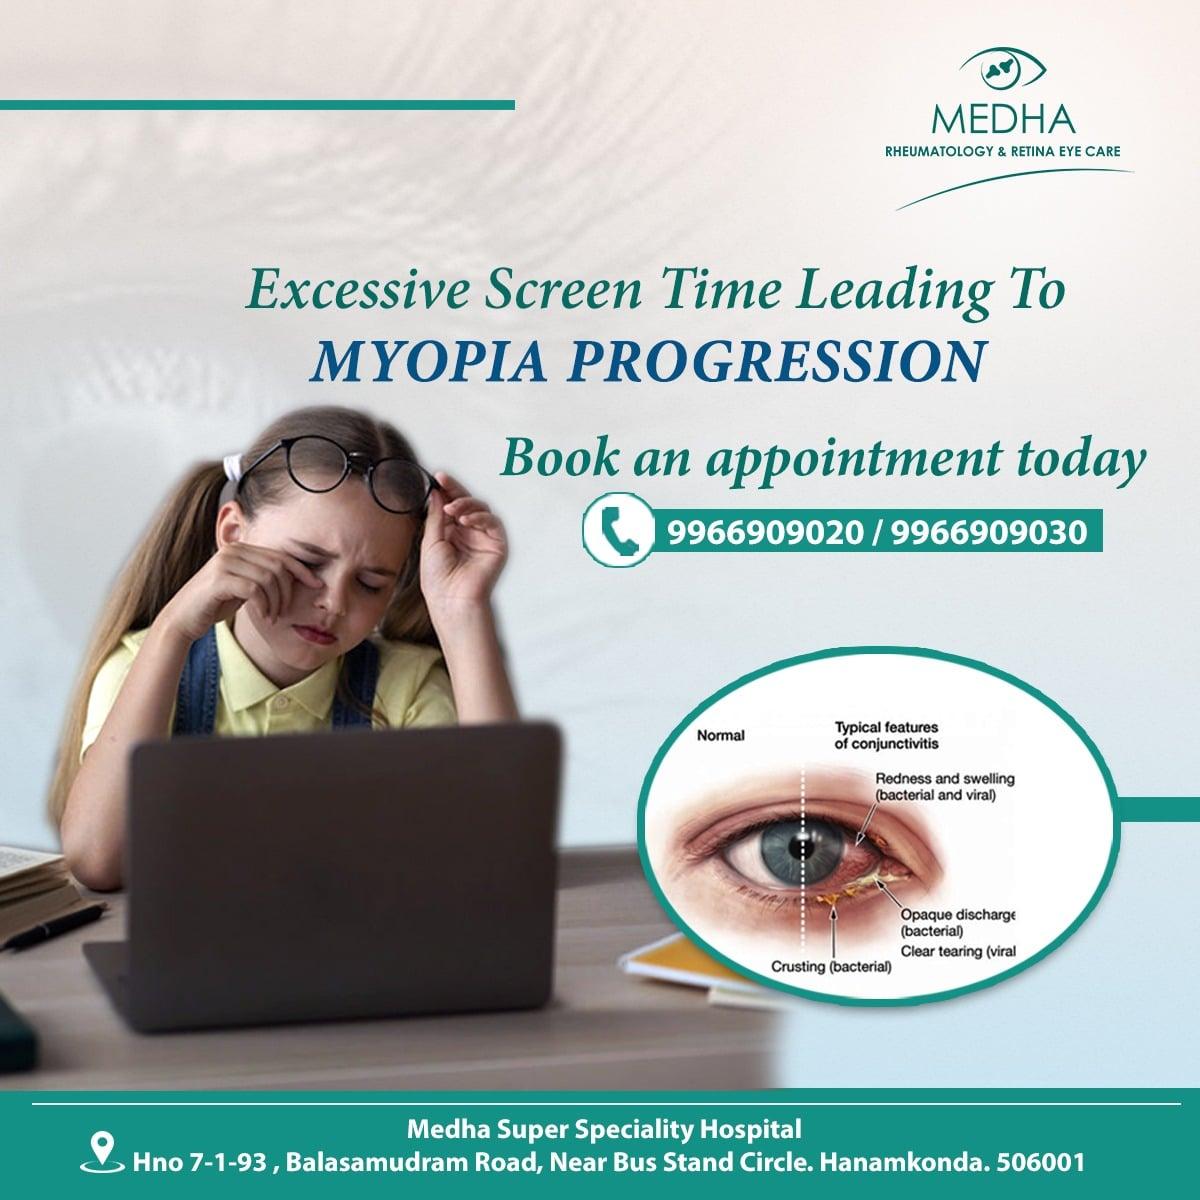 Excessive Screen Time Leads To MYOPIA PROGRESSION